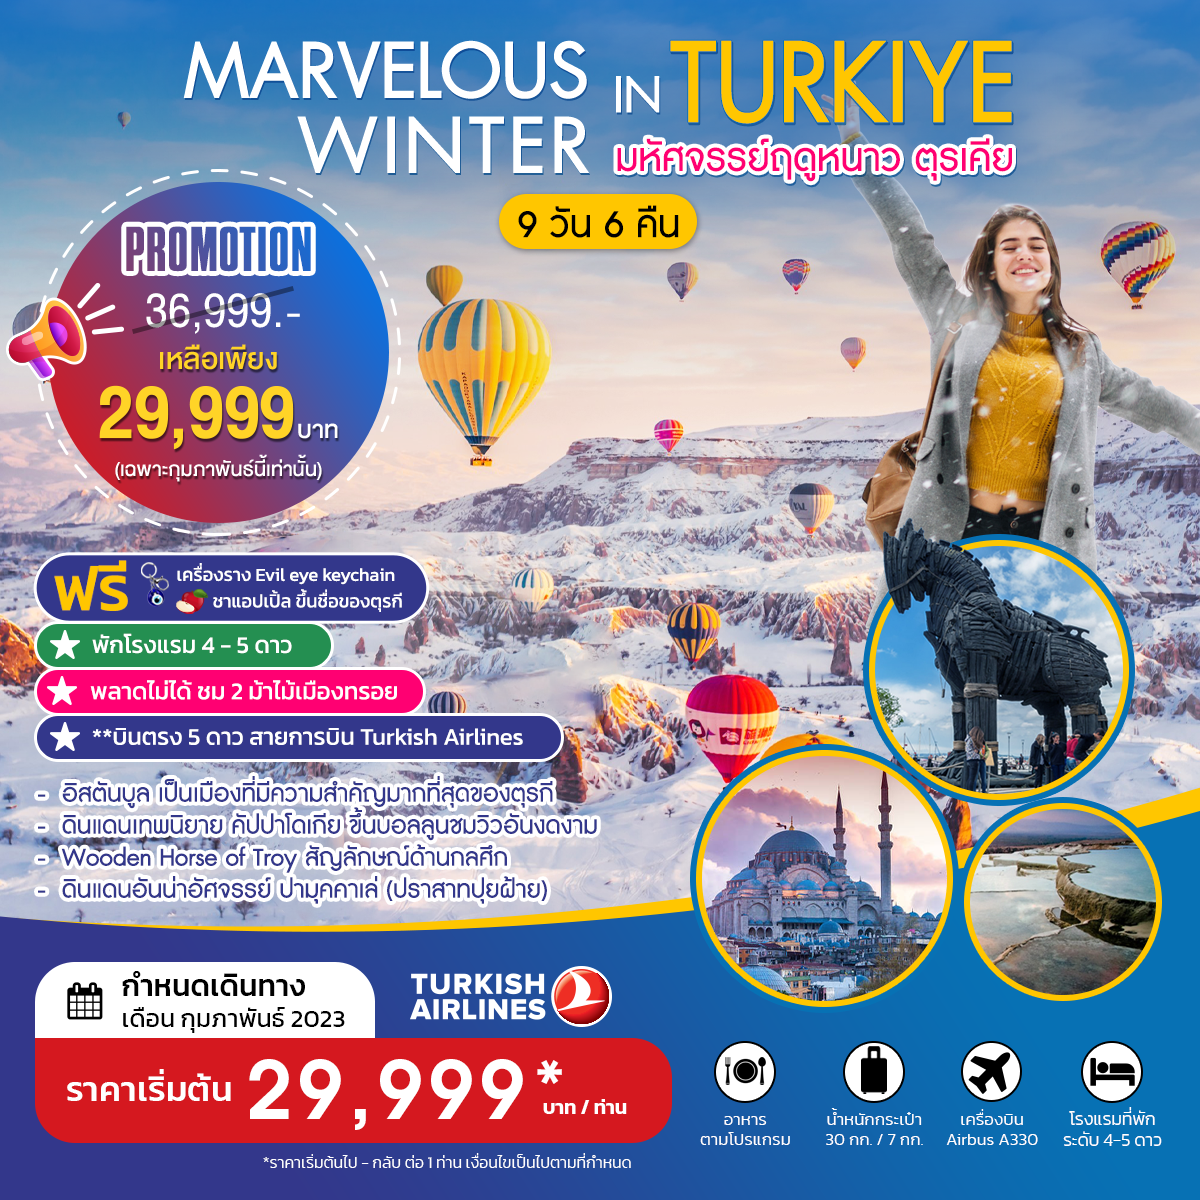 MARVELOUS WINTER IN TURKIYE มหัศจรรย์ฤดูหนาว ตุรเคีย PRO กุมภาพันธ์ 2023